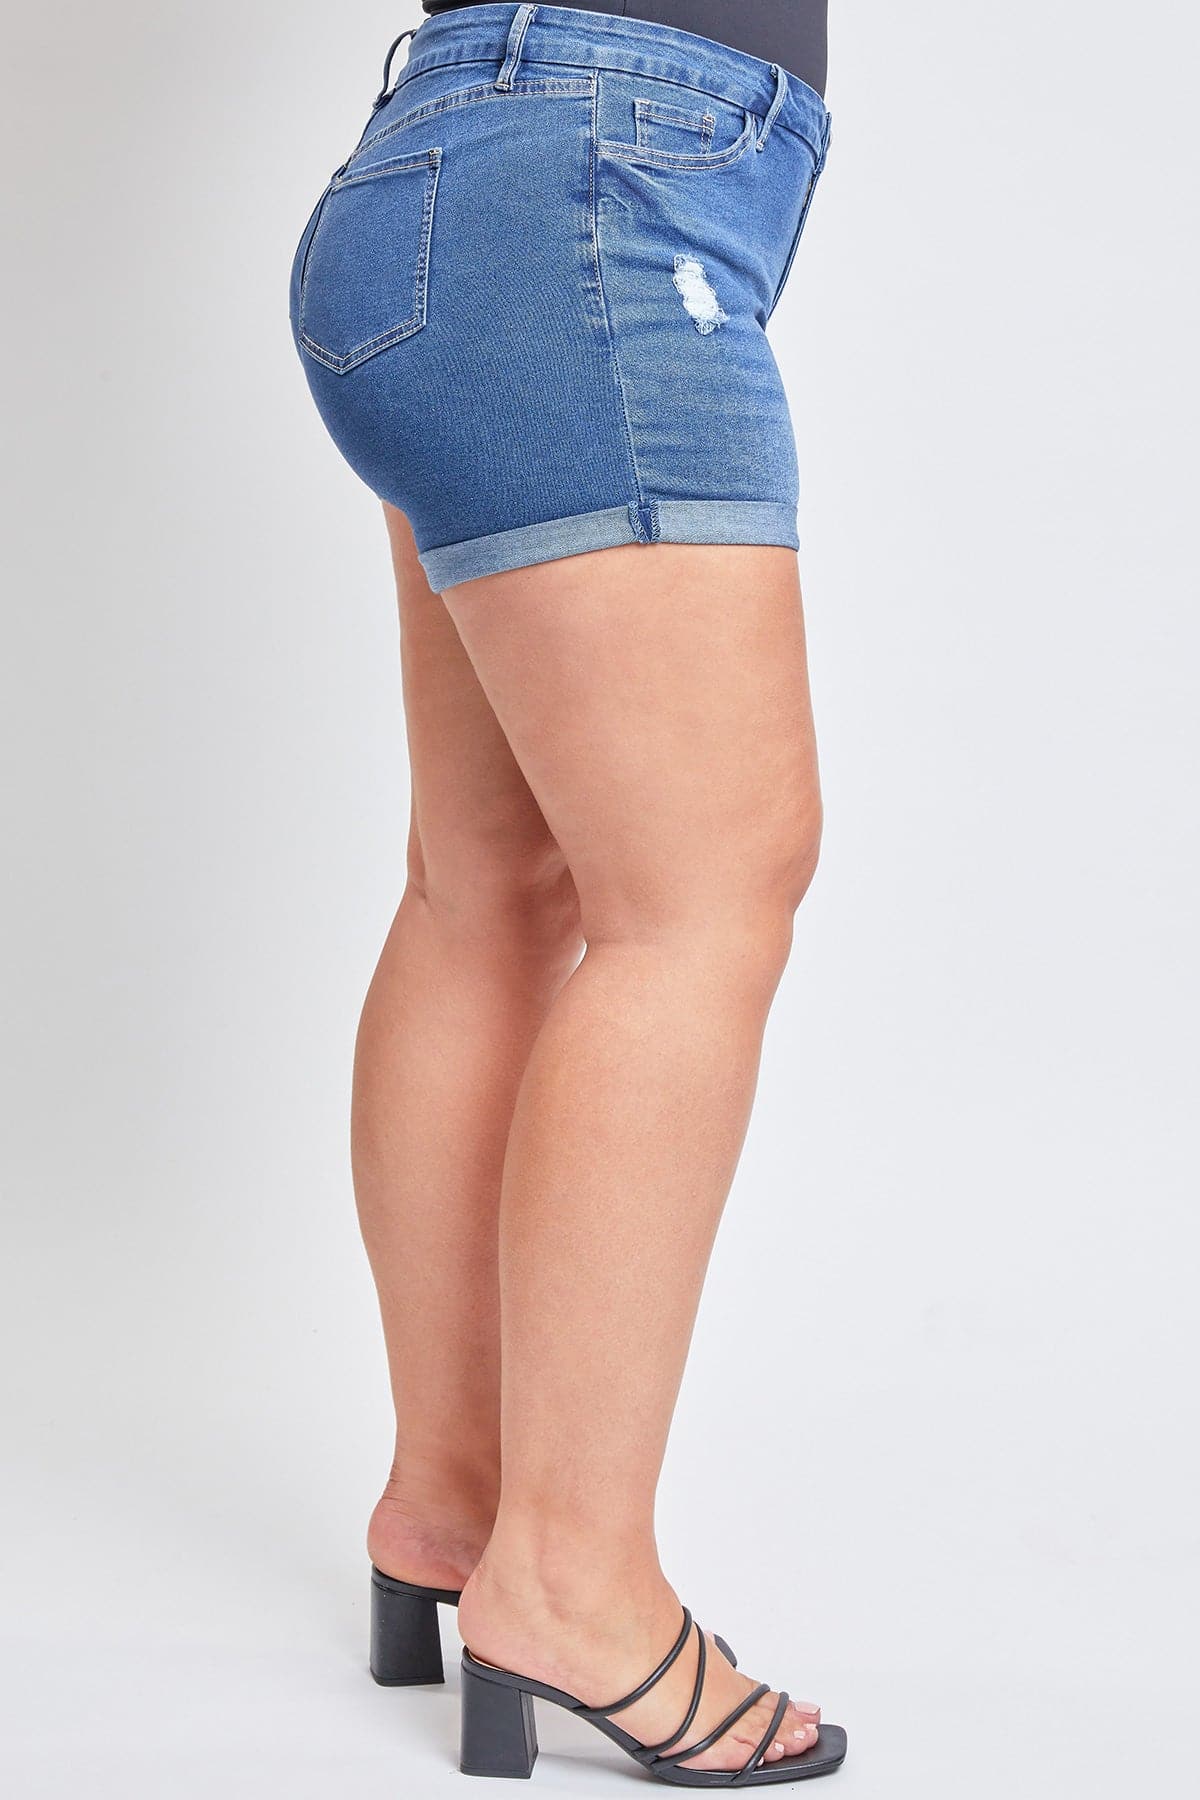 Plus Size Women's Curvy Fit Ultra  Cuffed Shorts